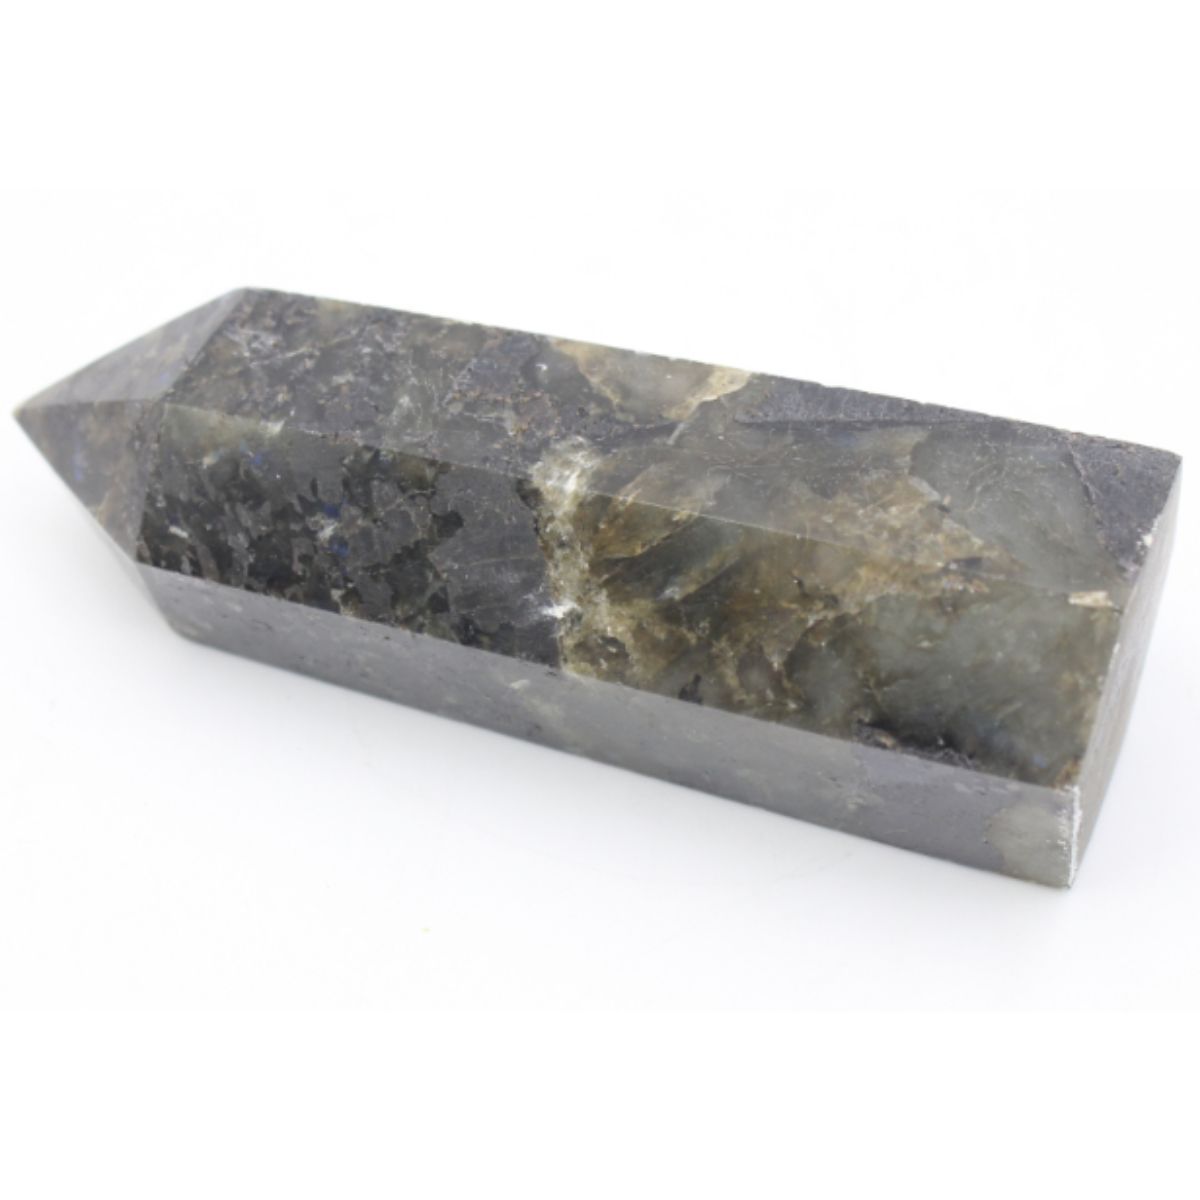 Pedra/Mineral Pontas Labradorite